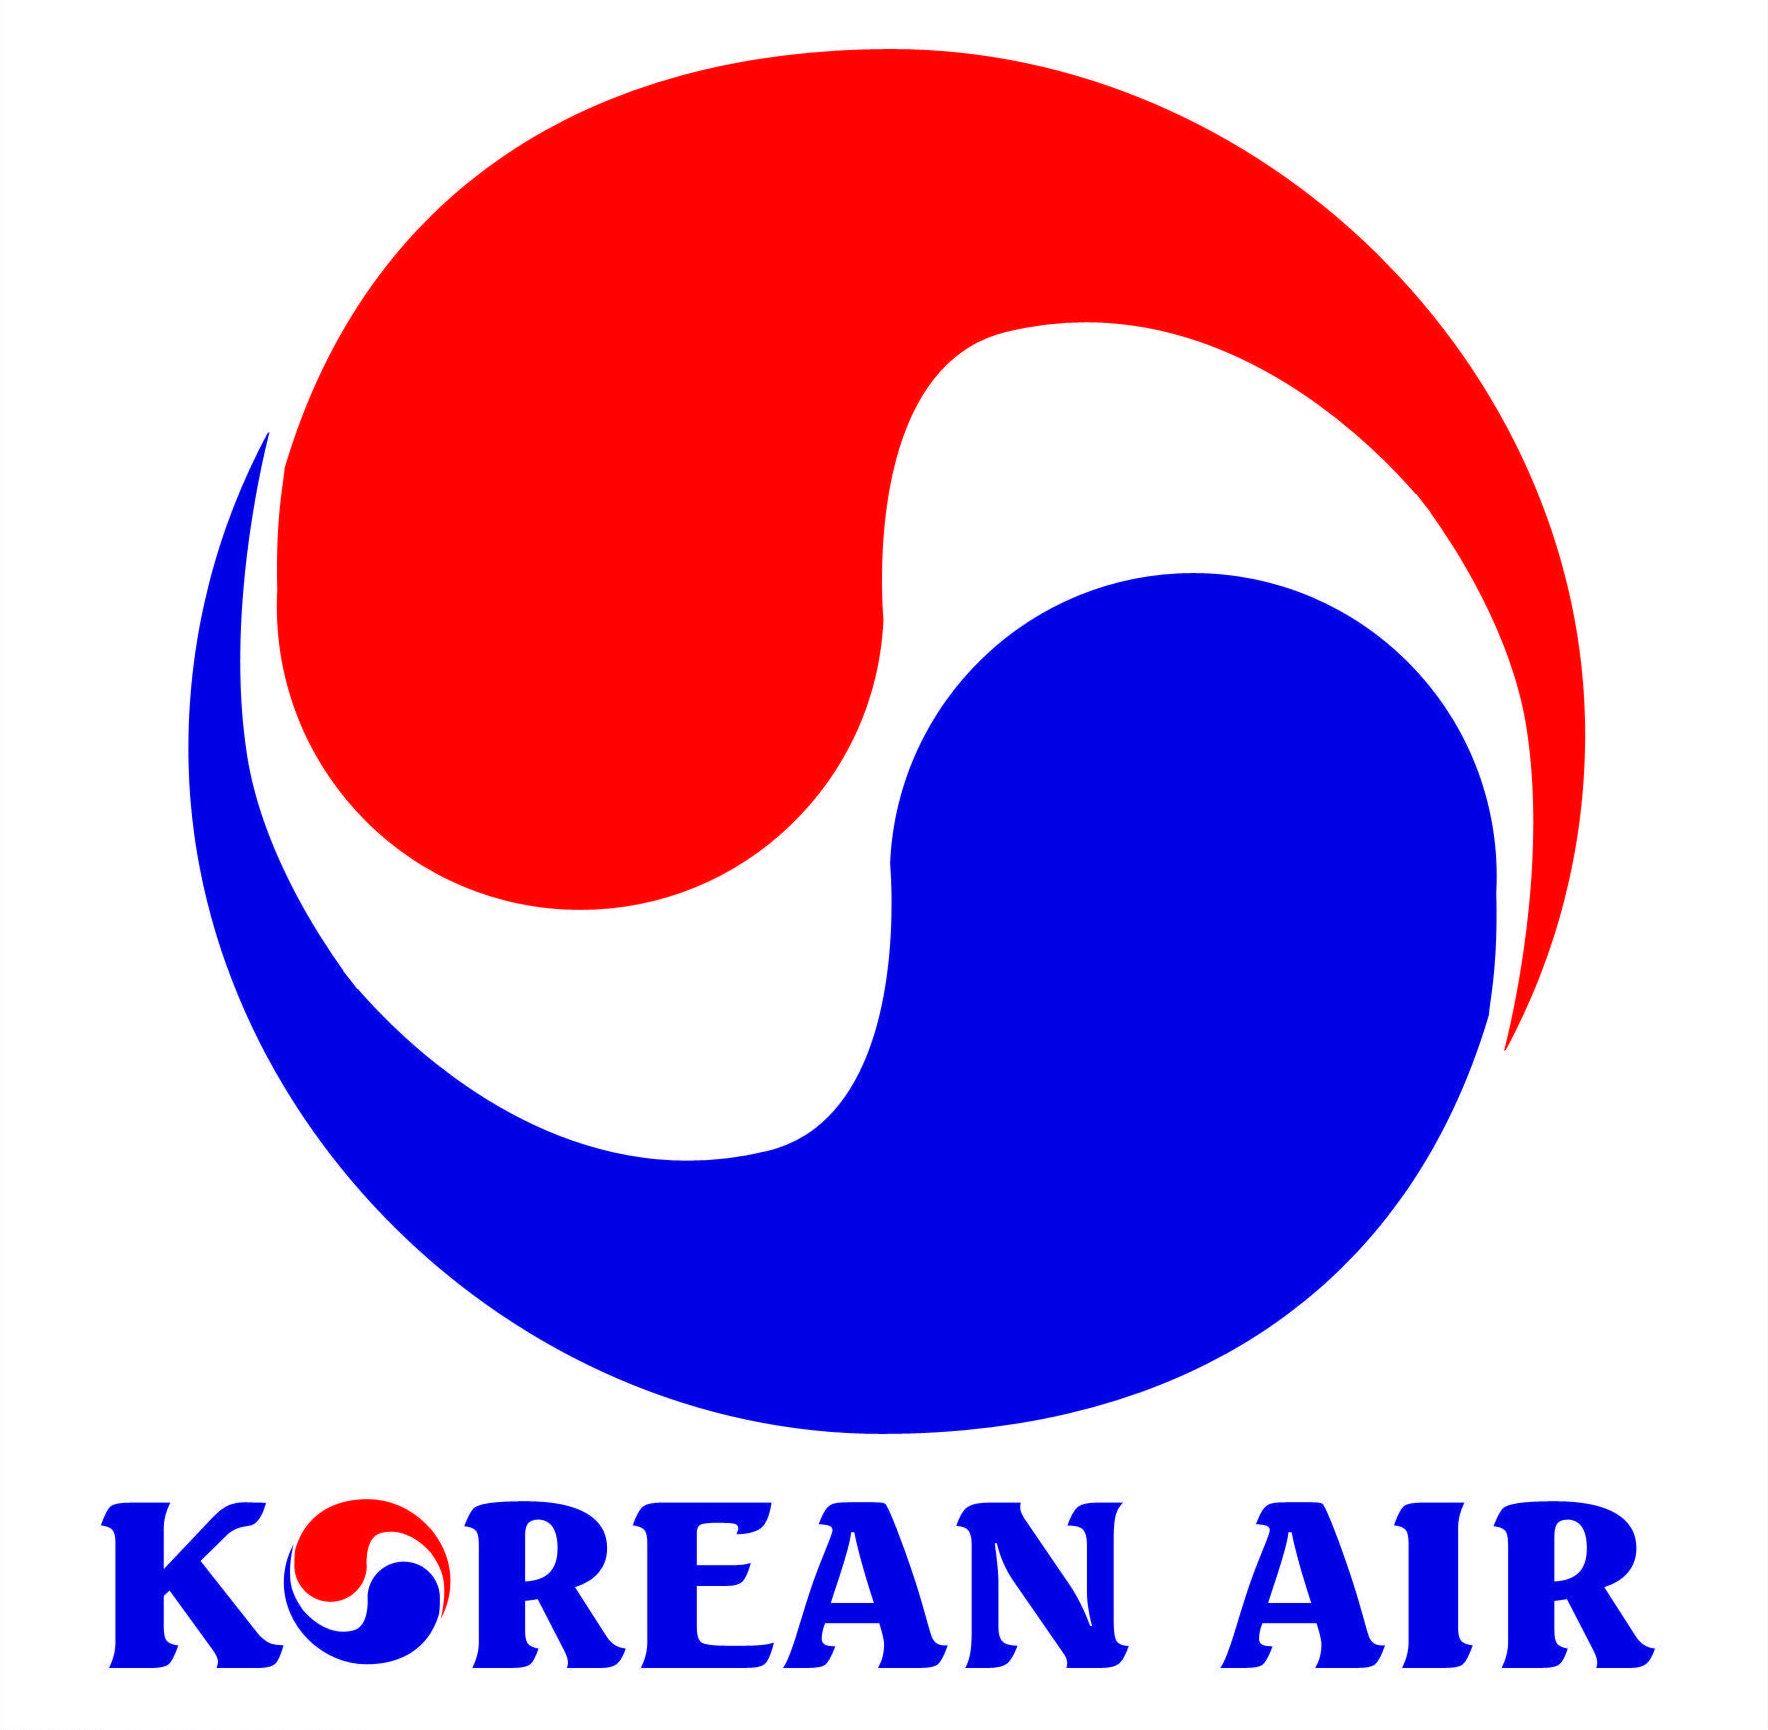 South Korean Company Logo - Branding Asia - Check Out These Designs